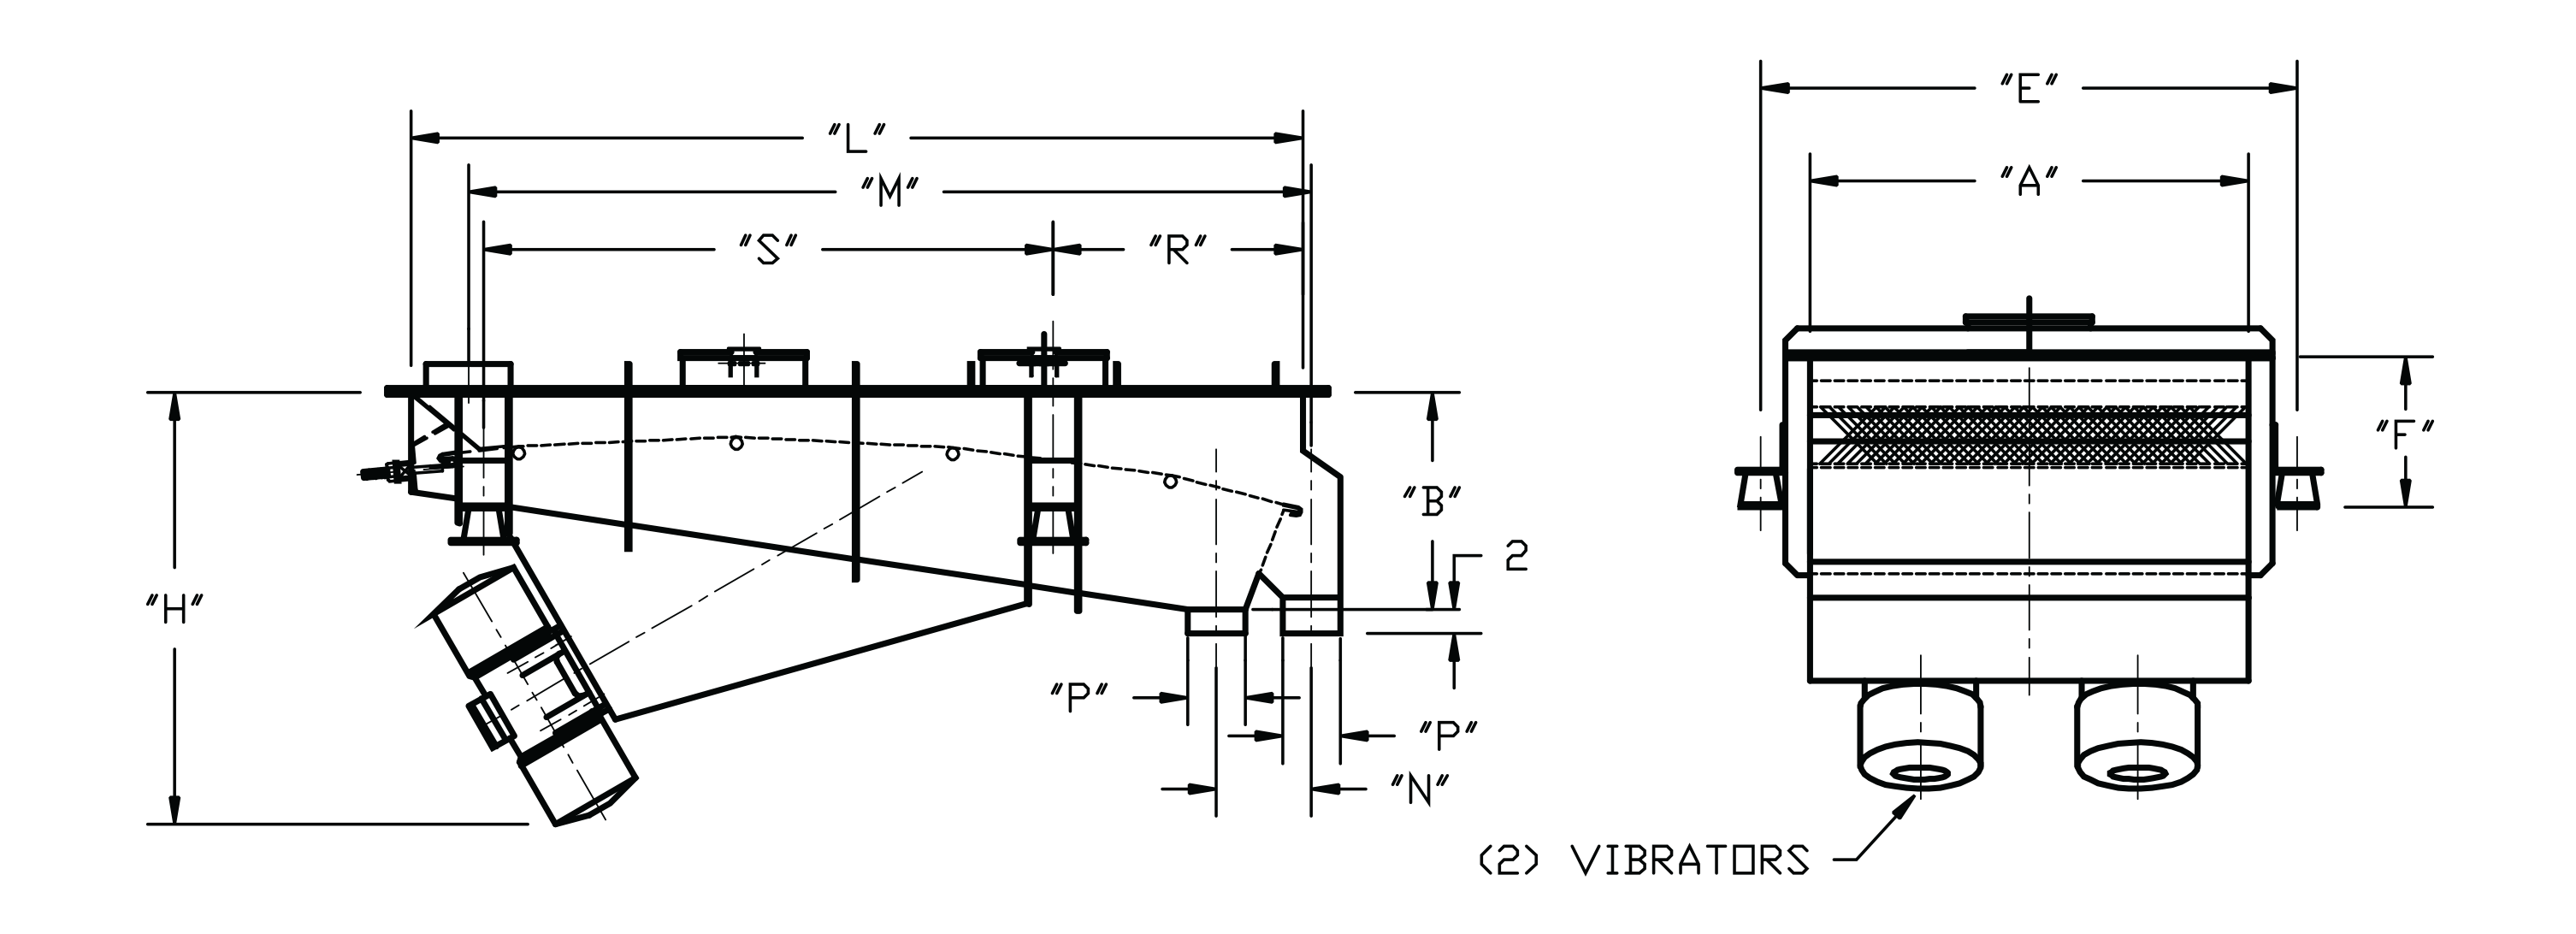 img_product-page_vibratory-screeners_02